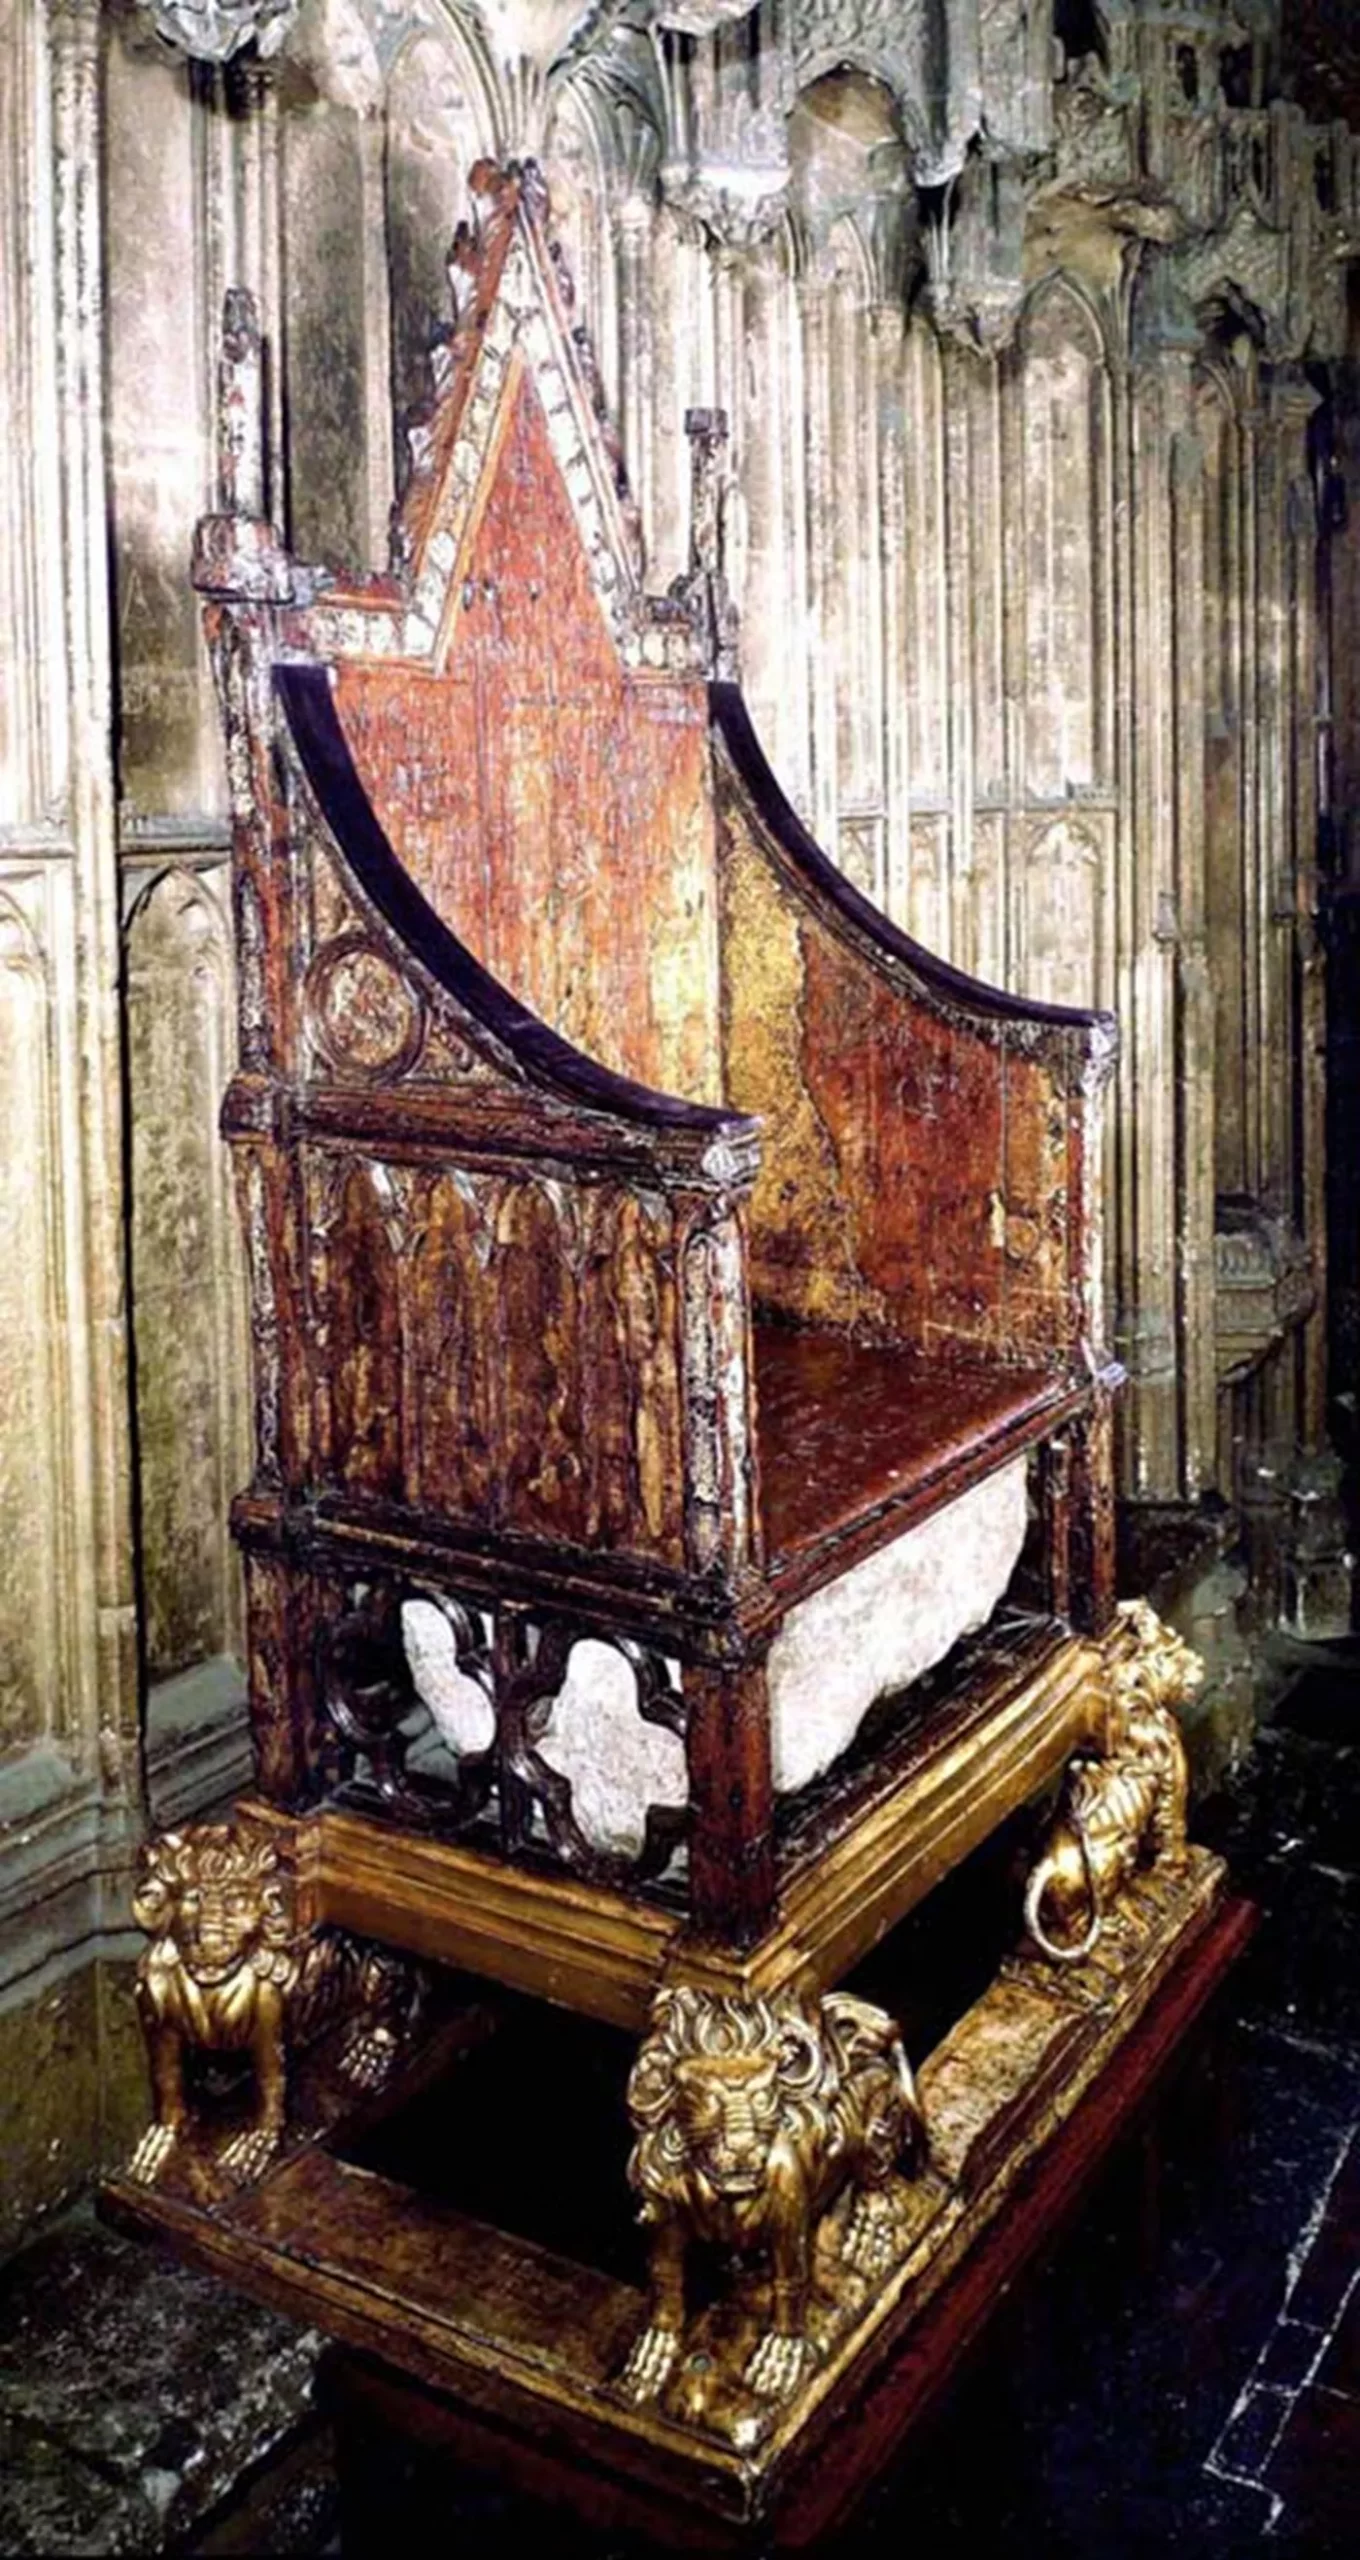 coronation chair stone scaled 700-летний дубовый трон реставрируется к коронации короля Карла III